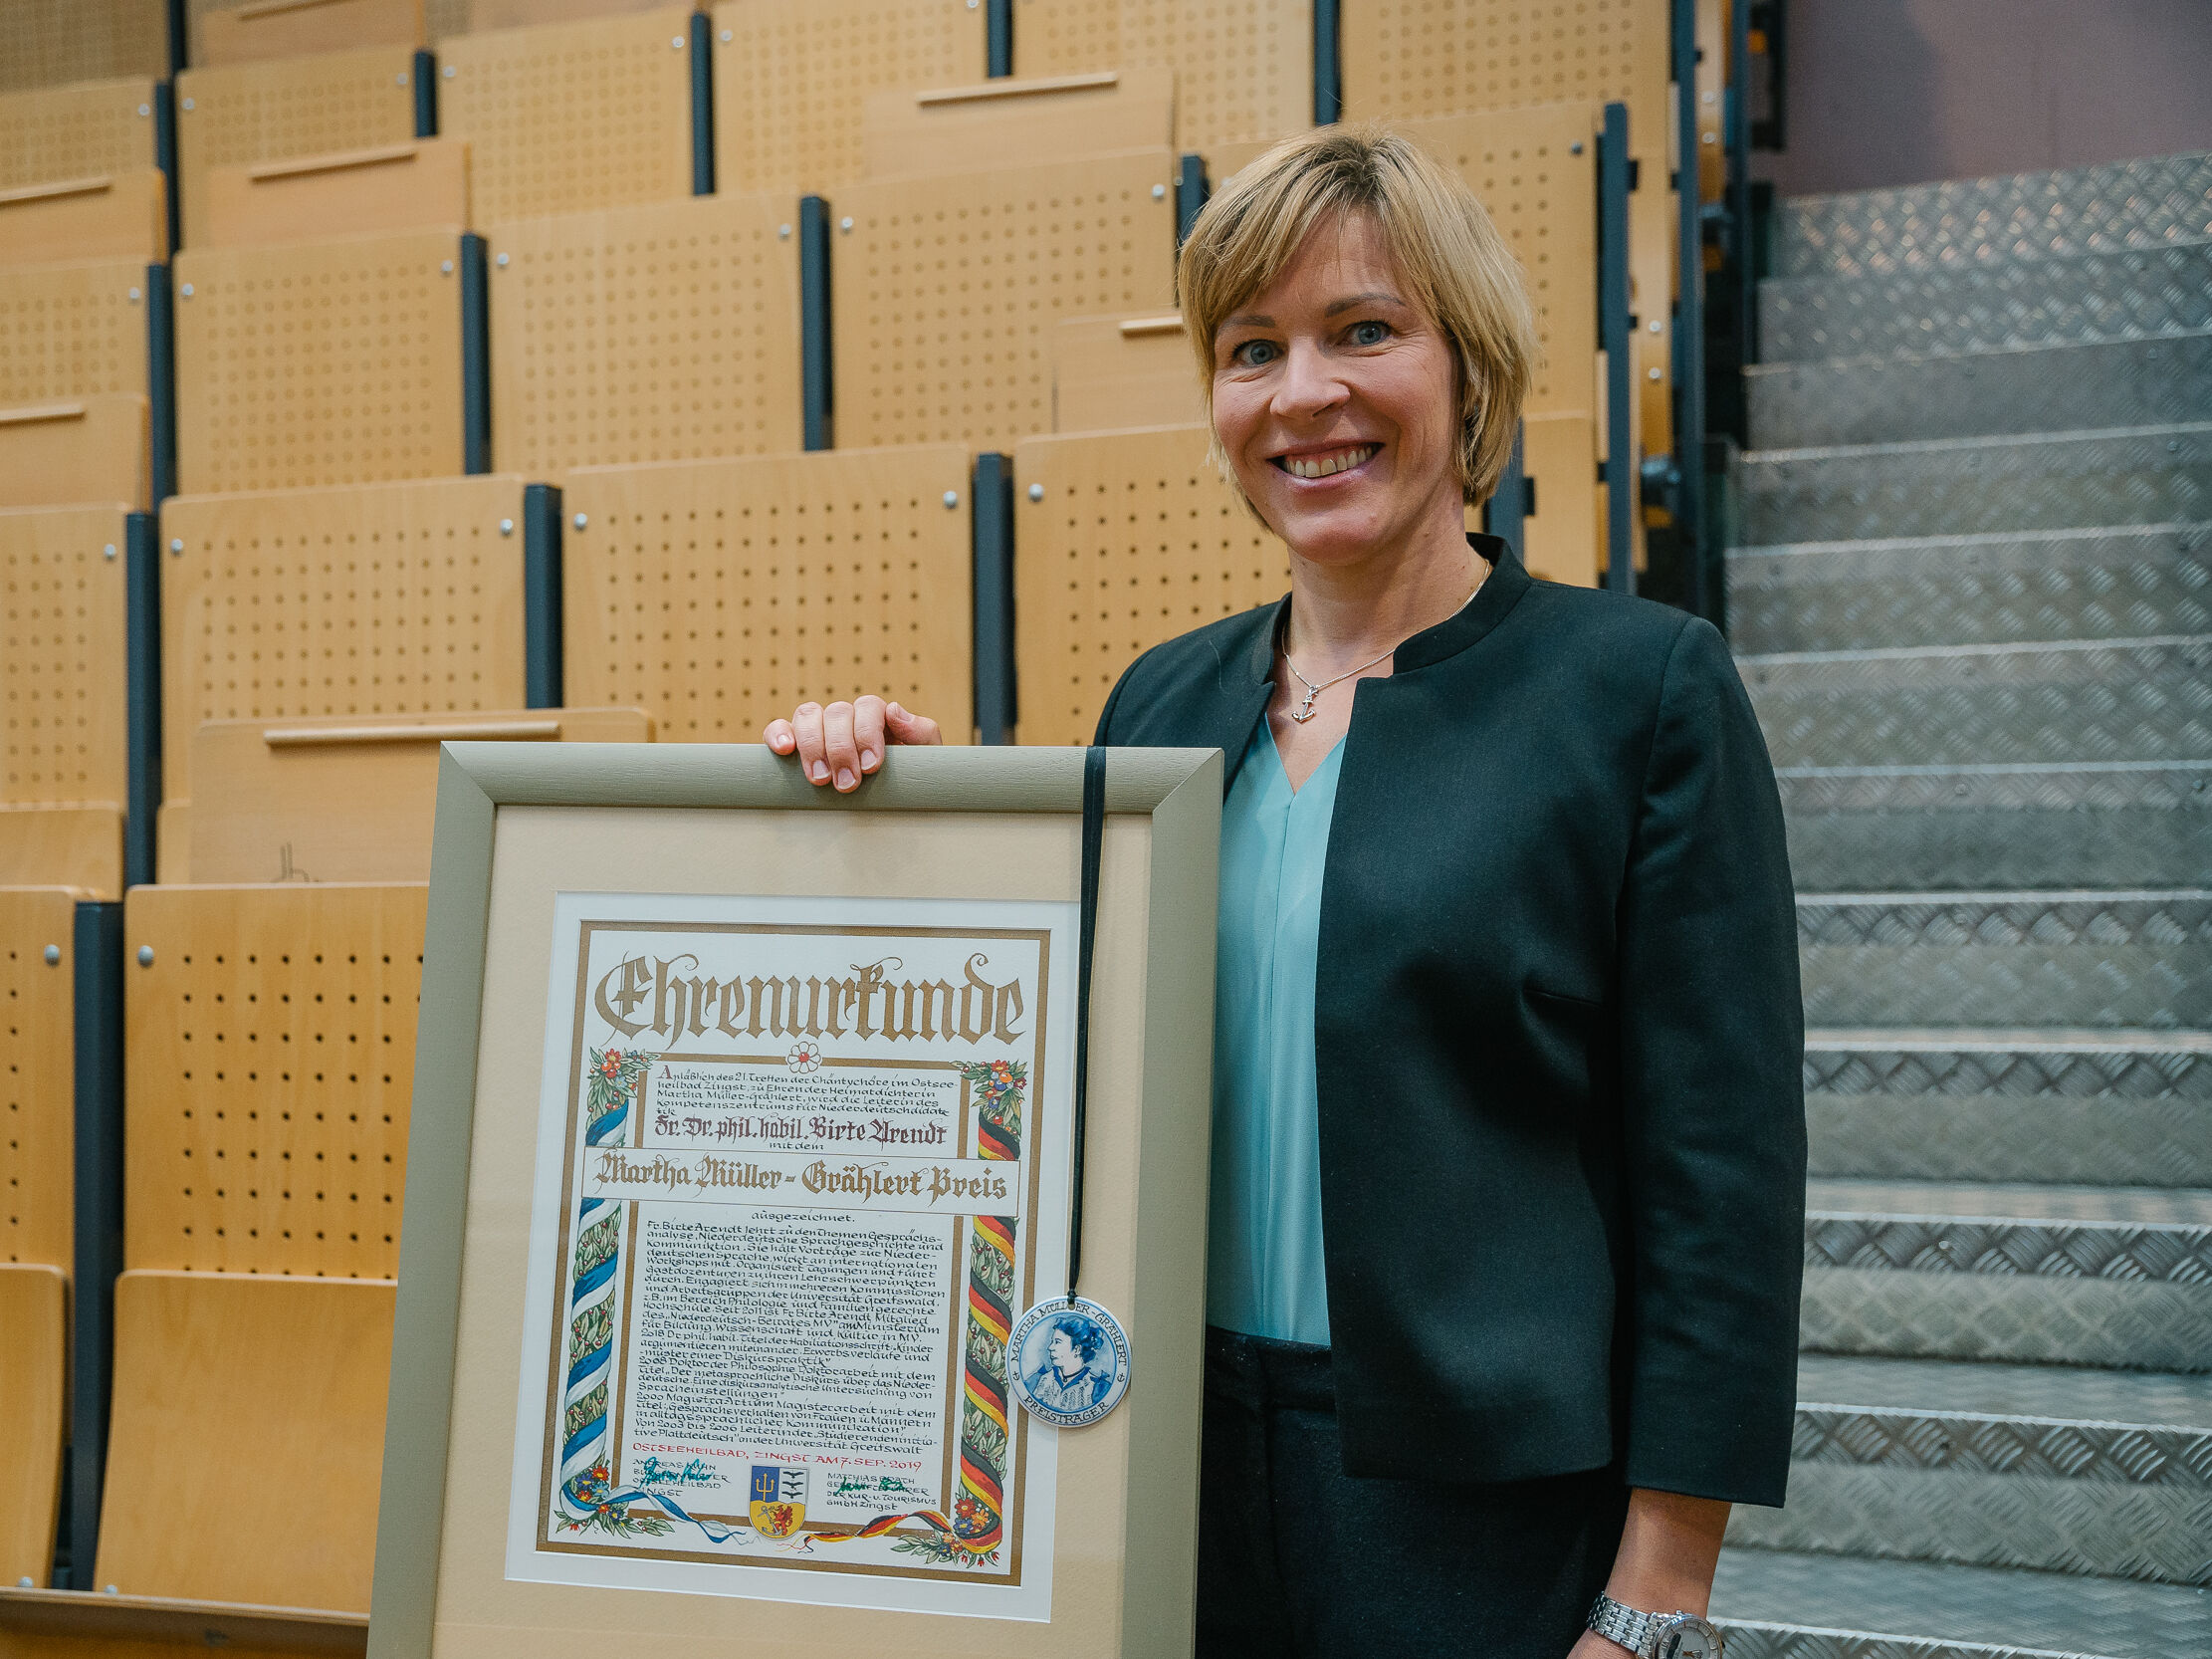 PD Dr. Birte Arendt mit der Urkunde zum Martha-Müller-Grählert-Preis – Foto: Till Junker